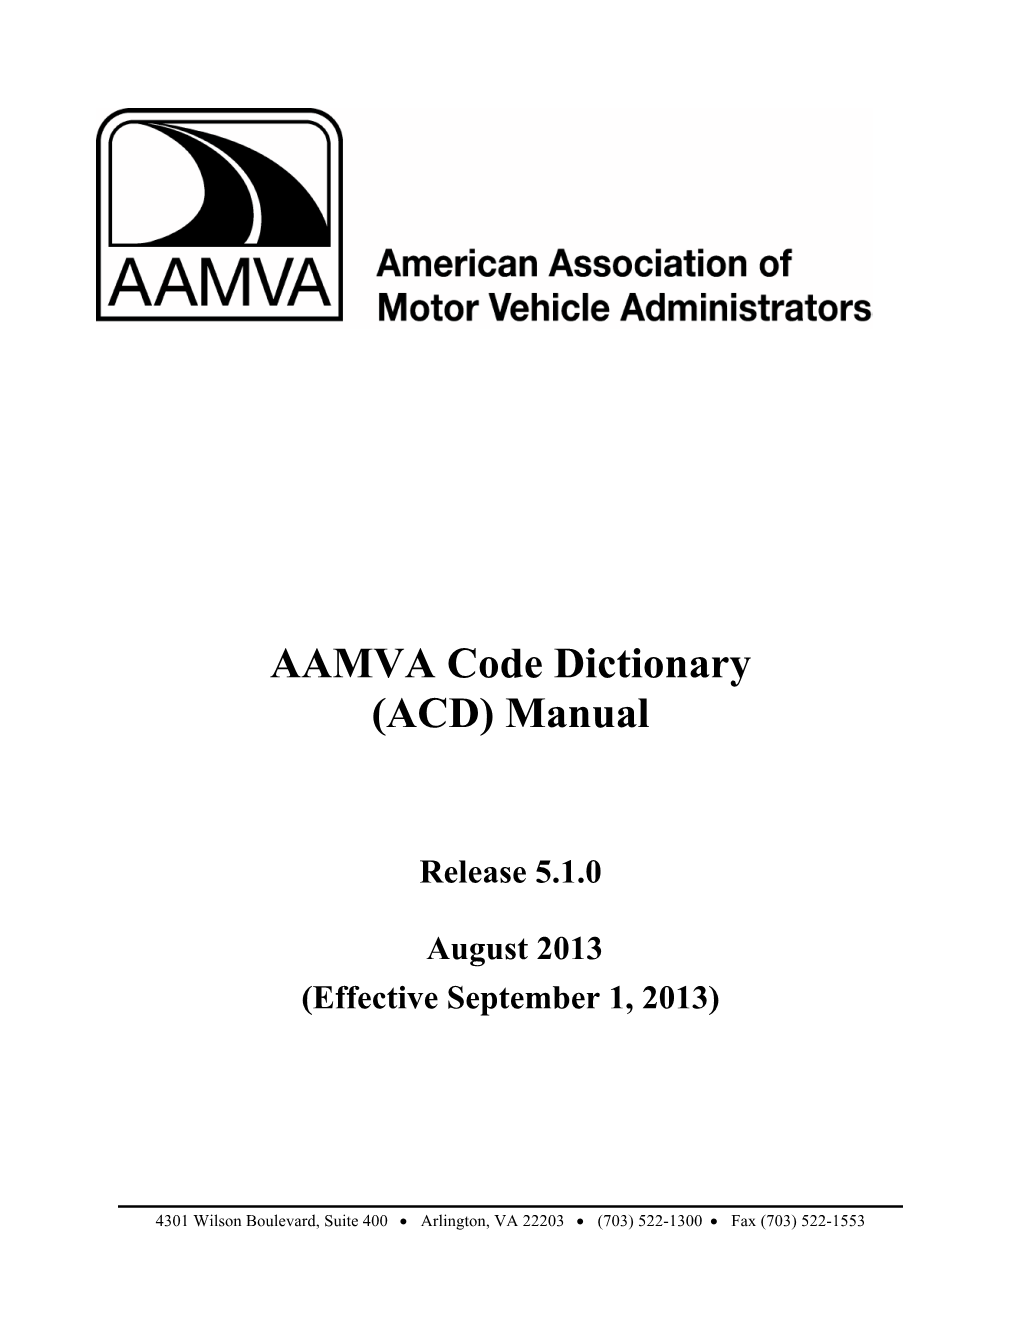 AAMVA Code Dictionary (ACD) Manual